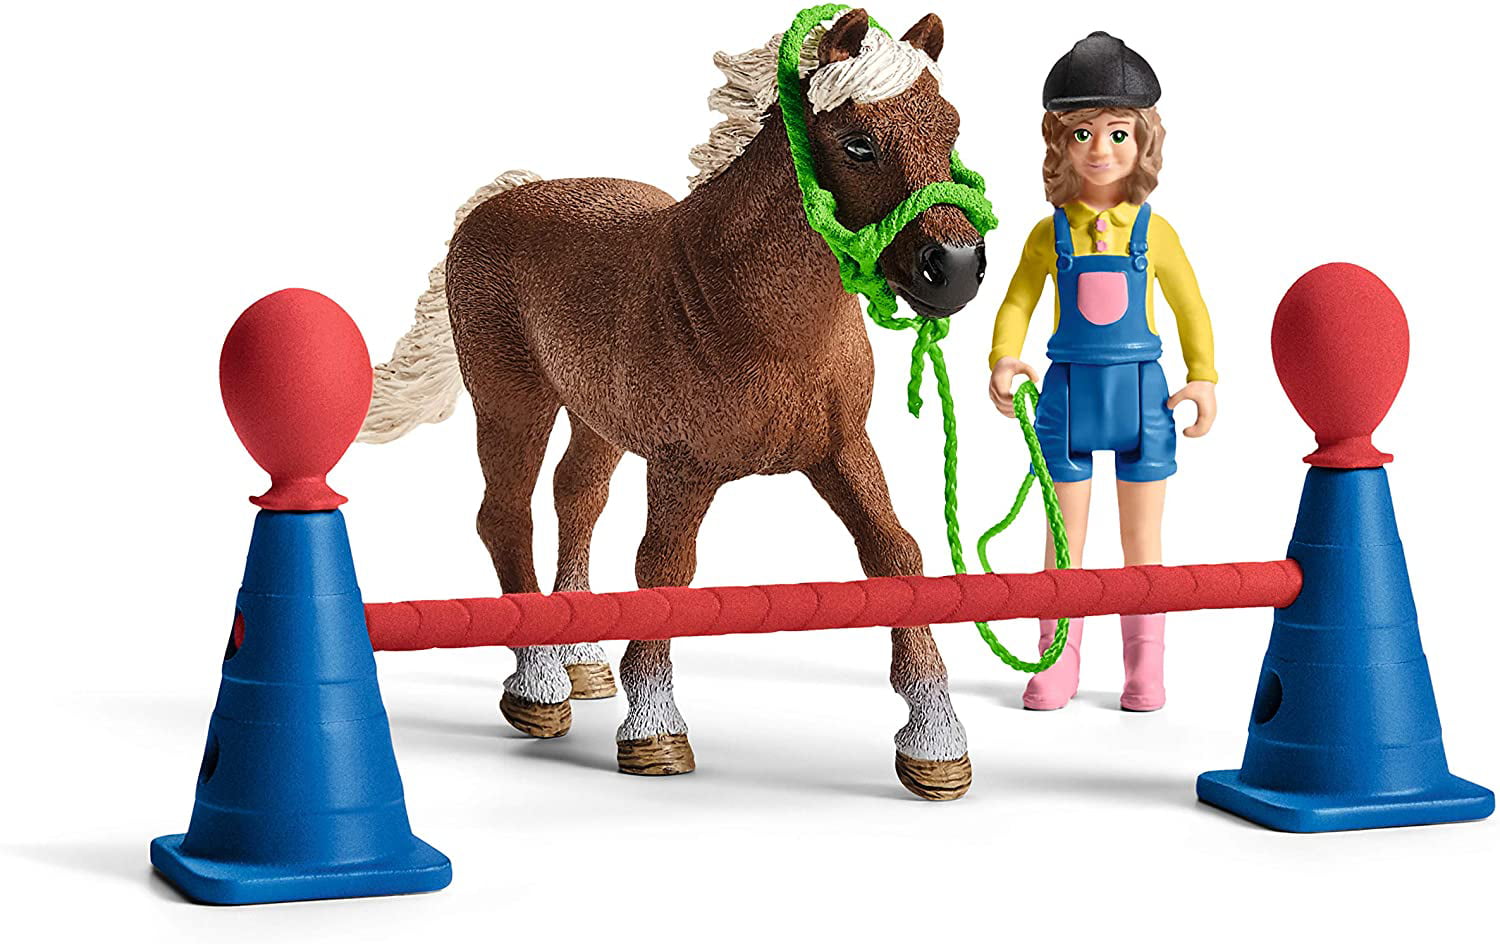 Bro Farm World Pony Agility Training 41-piece Horse Playset for Kids Ages 3-8